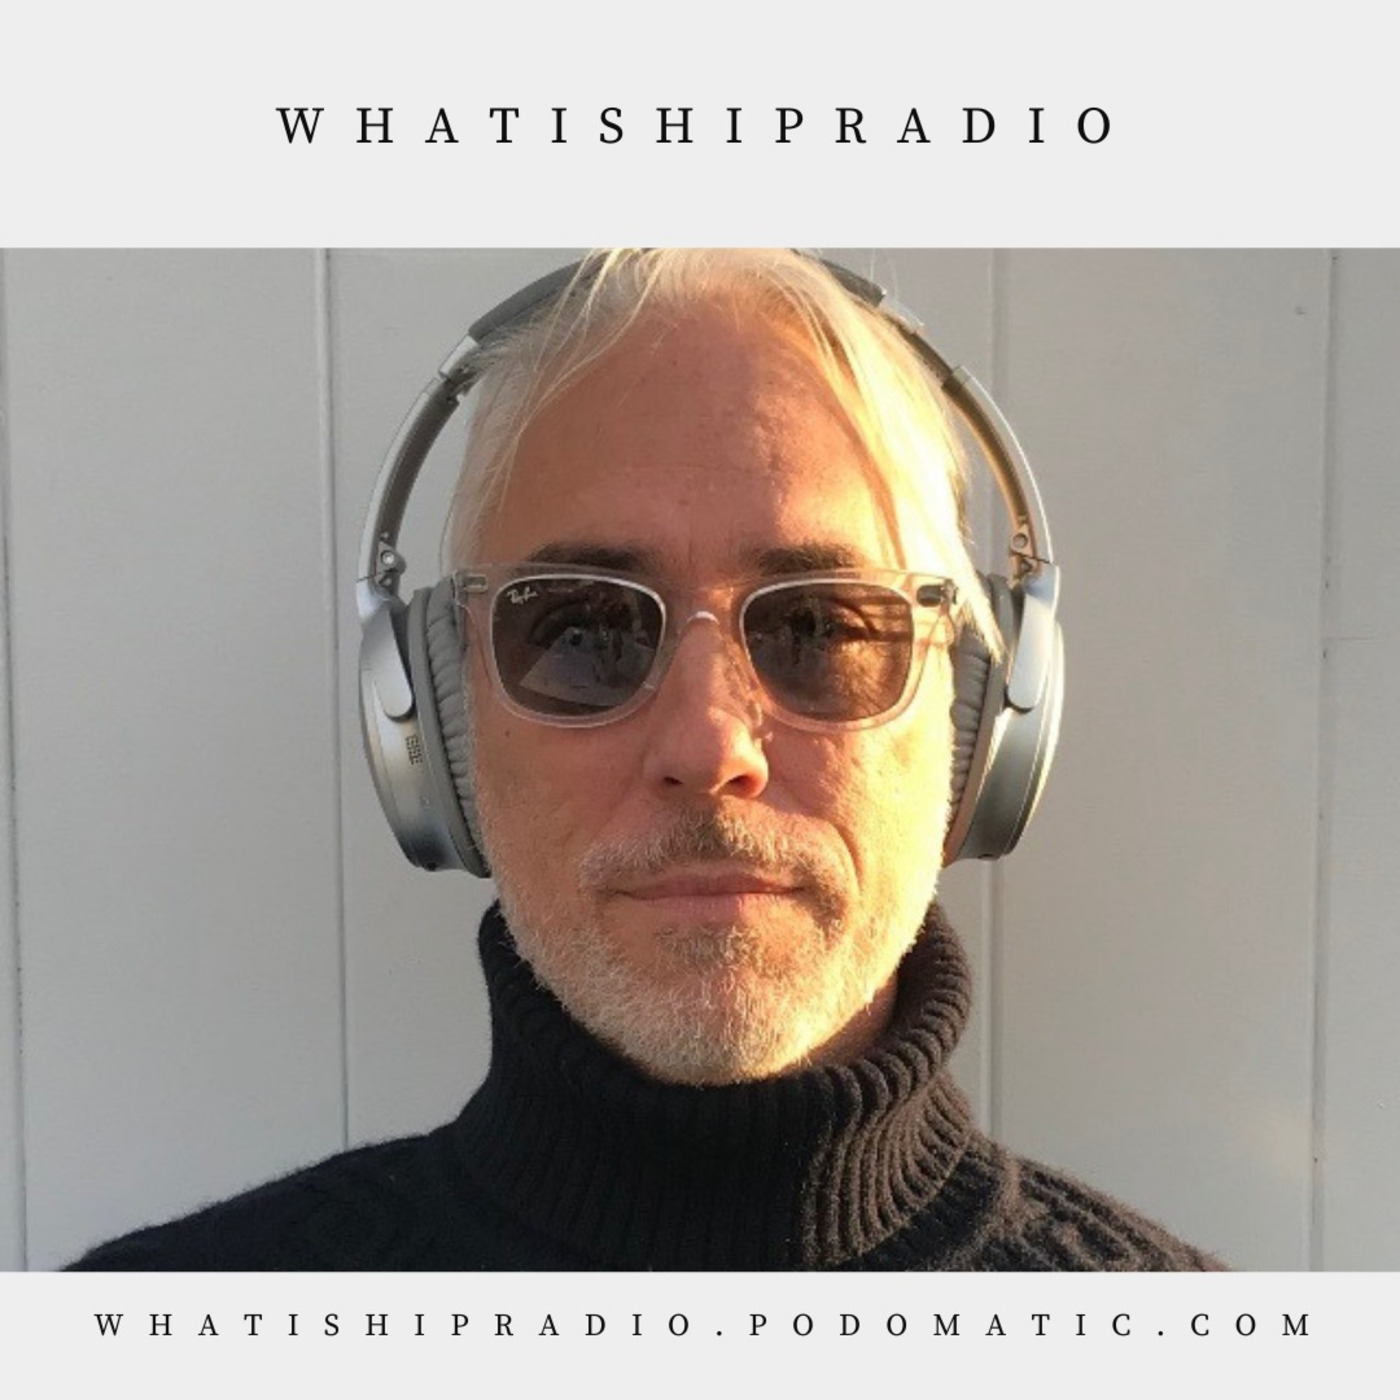 whatishipradio's podcast